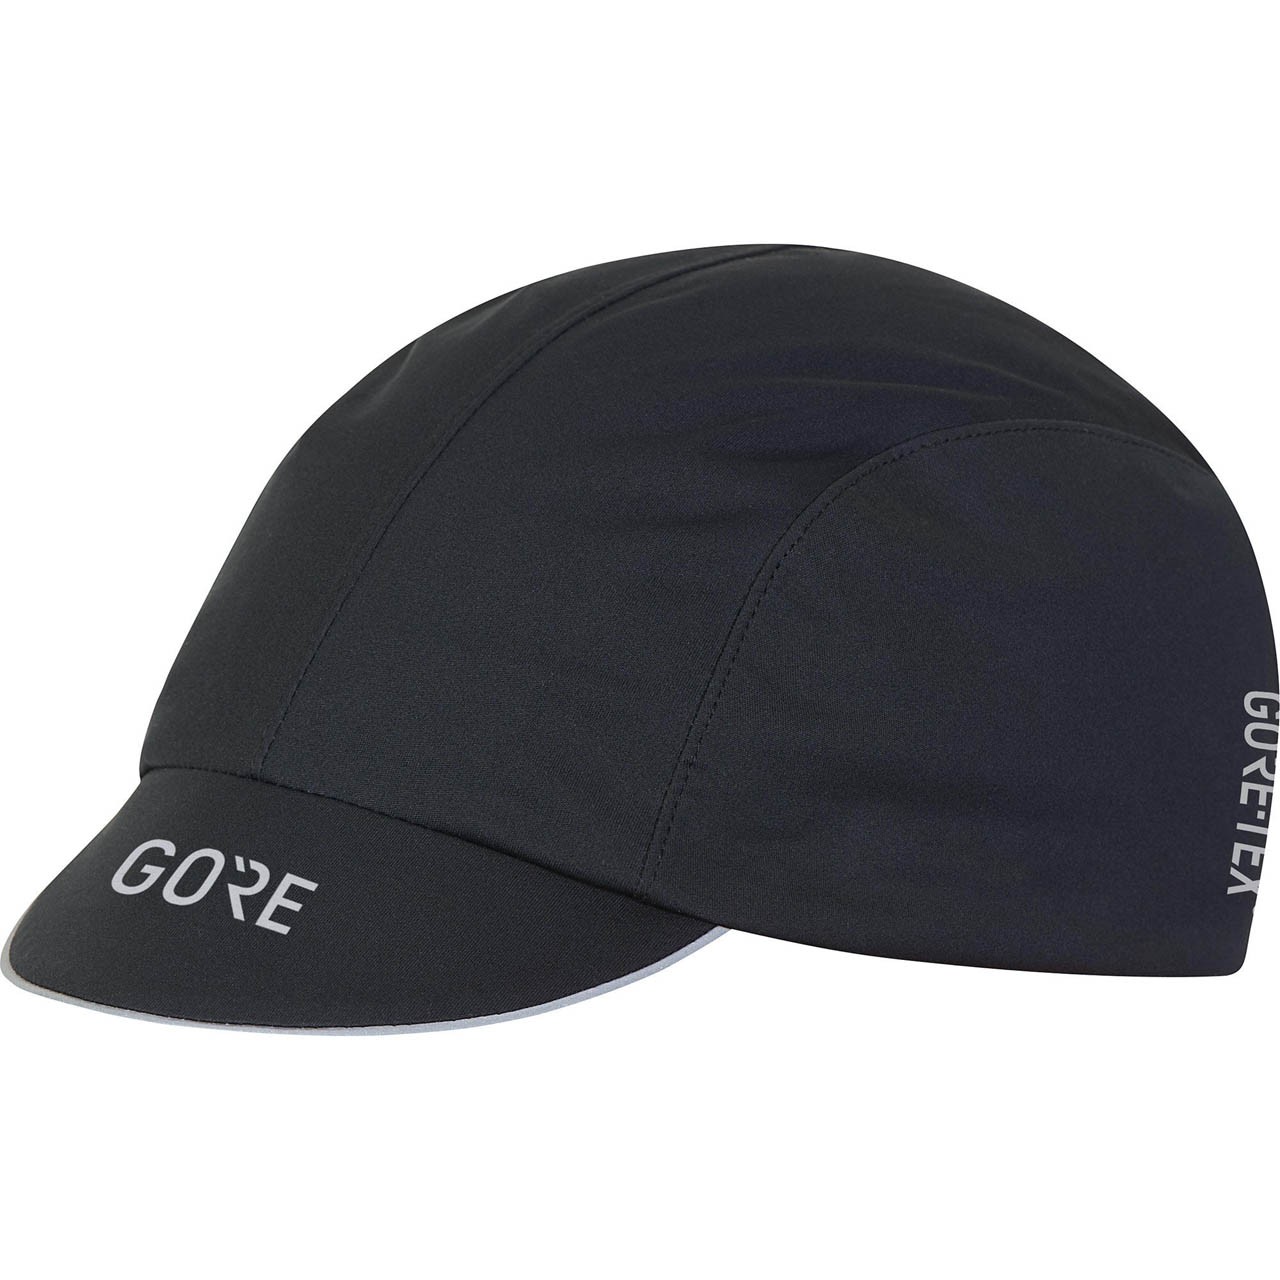 Gore Wear C7 Gtx Cap Black Kappe Radkappe Fahrradkappe Mütze Radmütze Schwarz